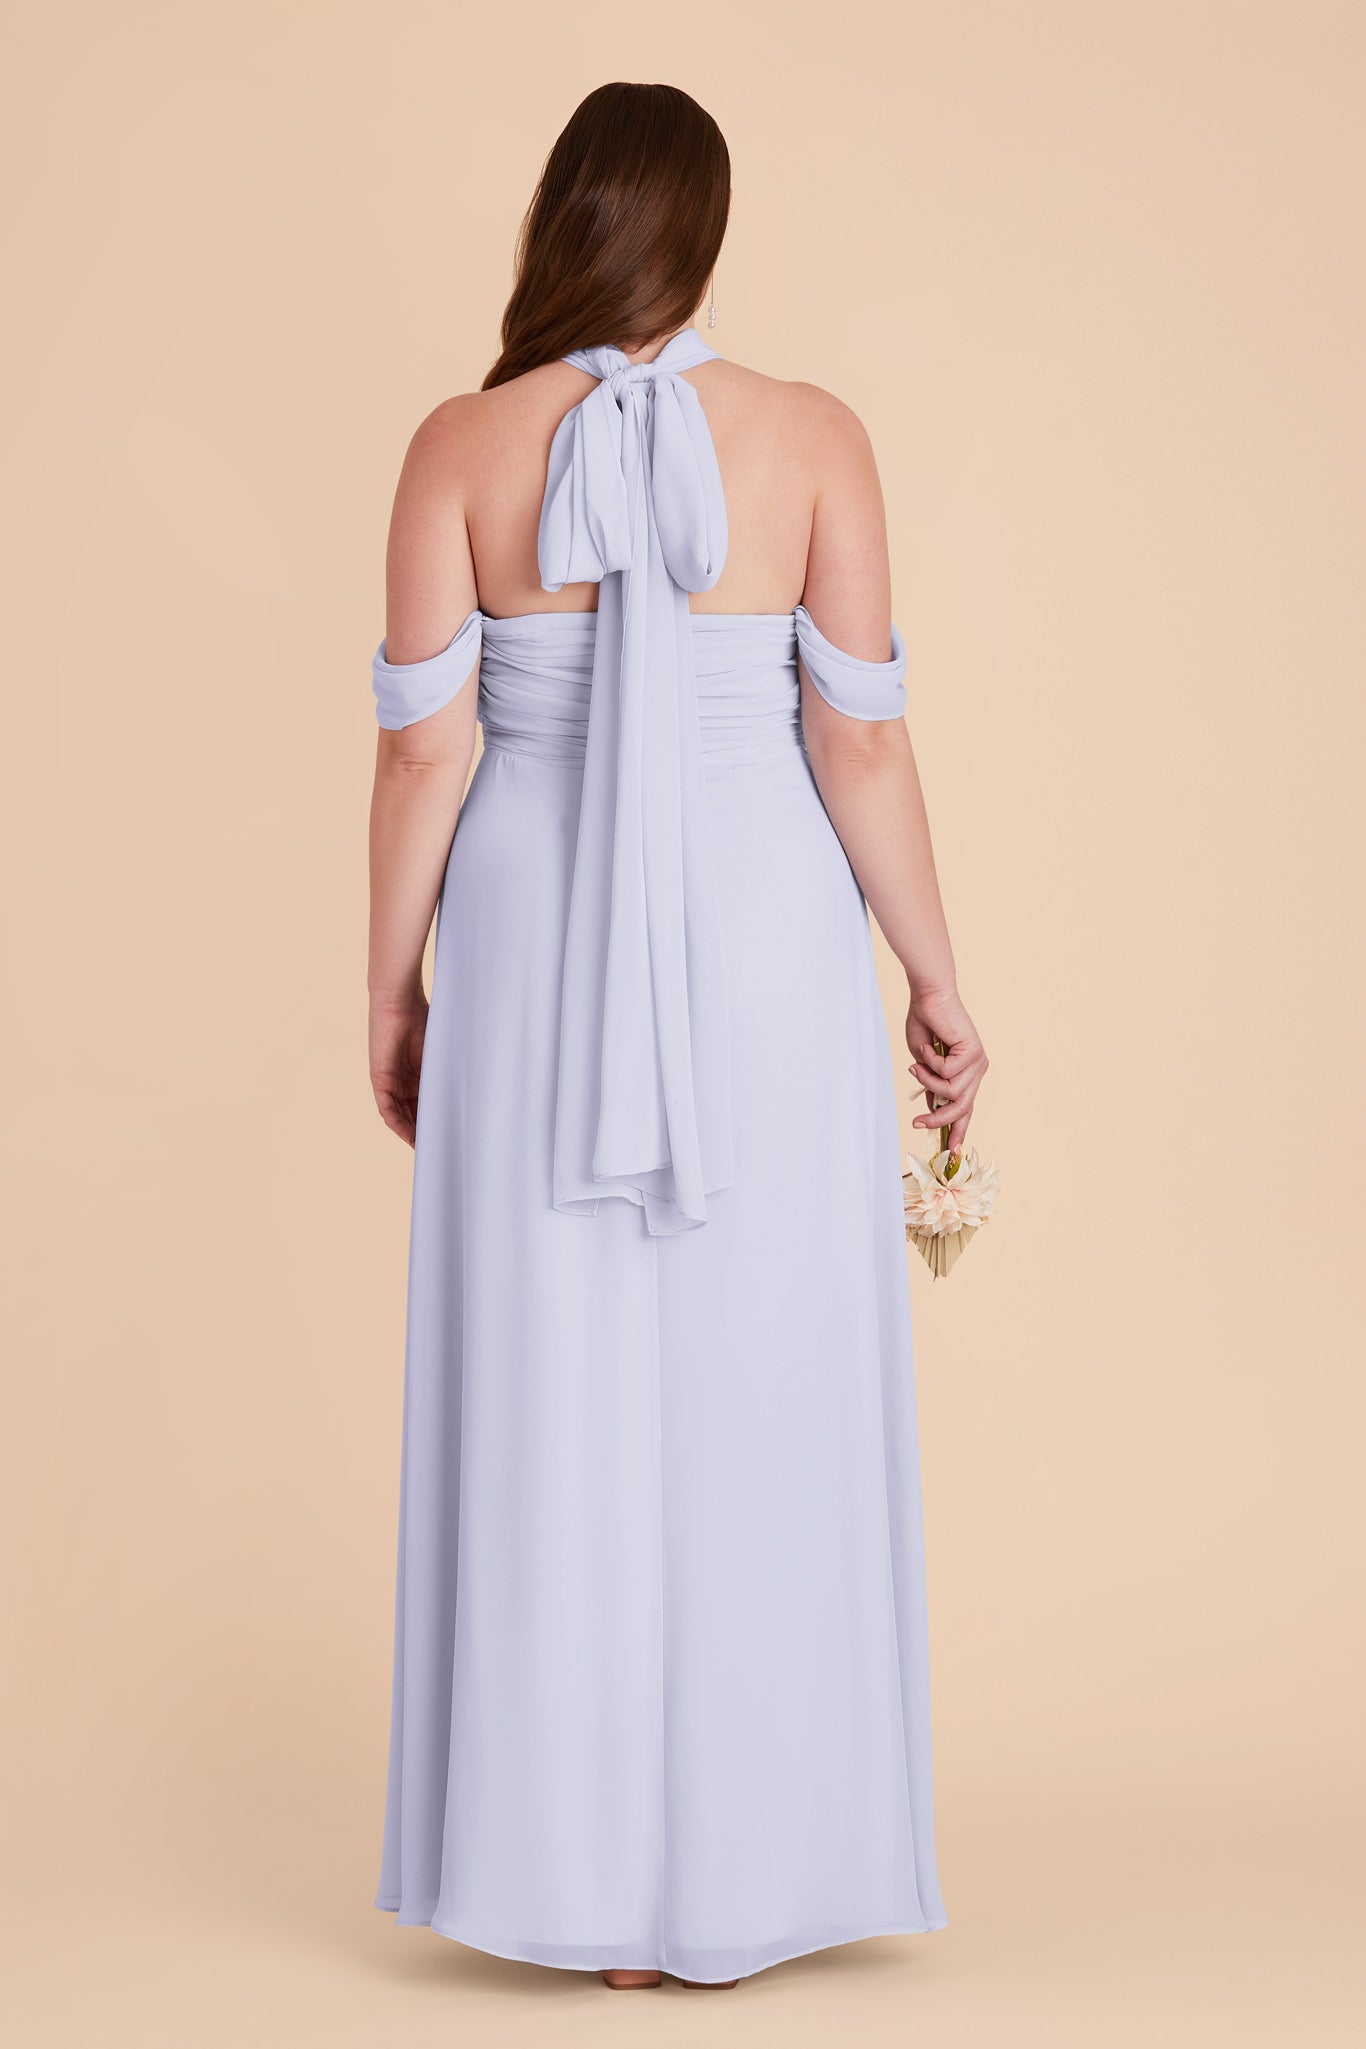 Periwinkle Blue Cara Chiffon Dress by Birdy Grey